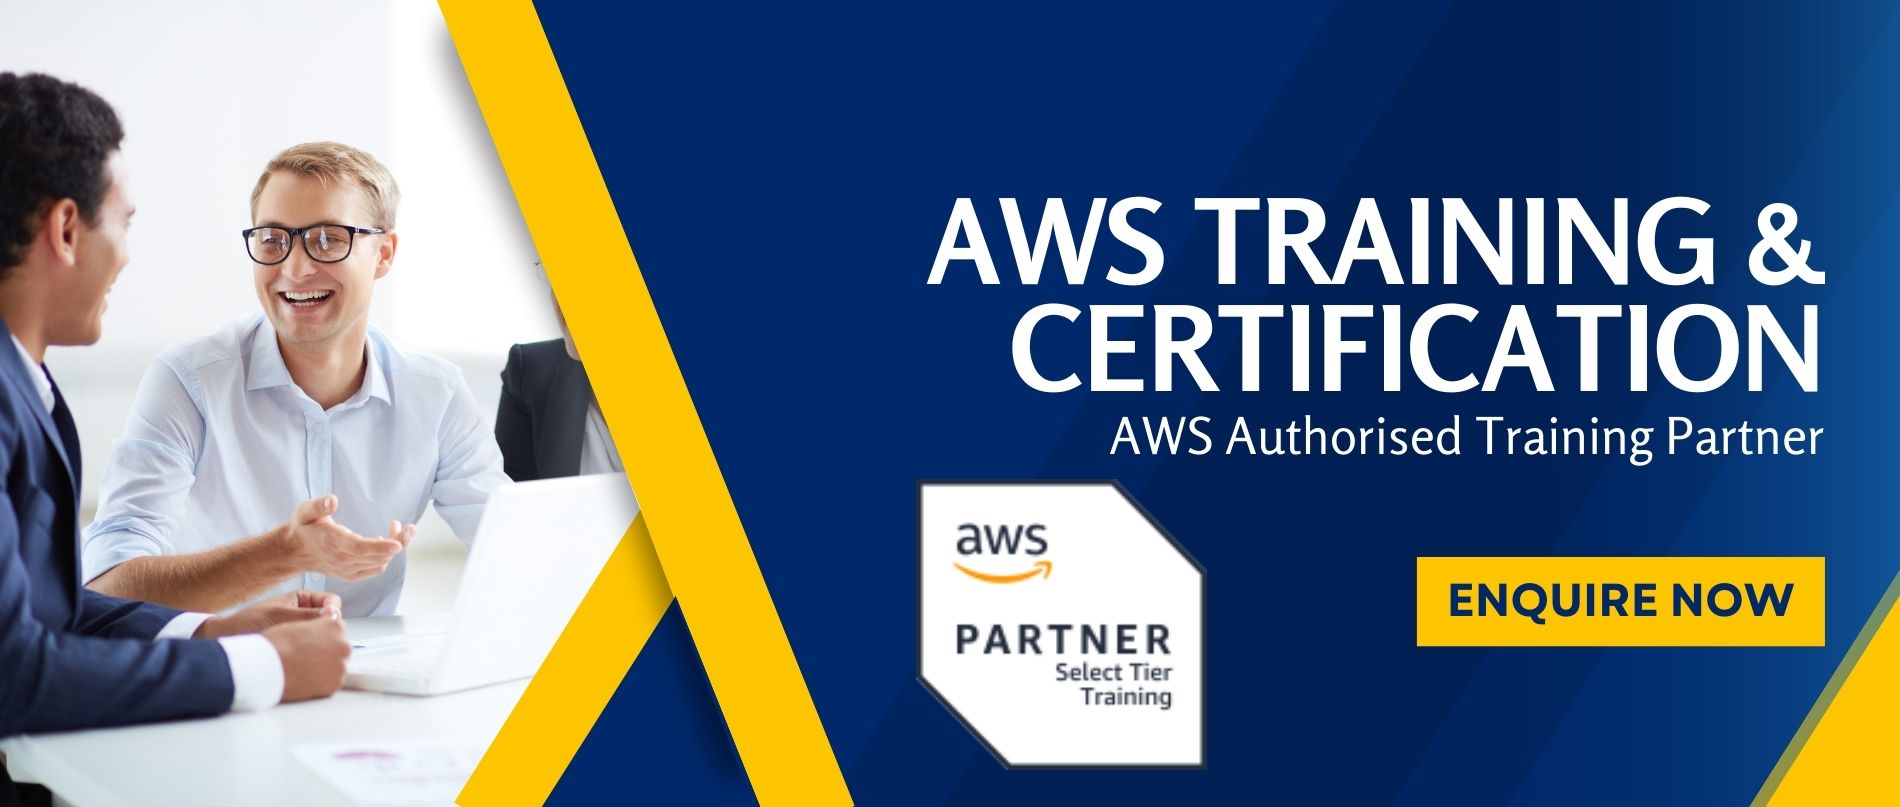 AWS-Training-&-Certification